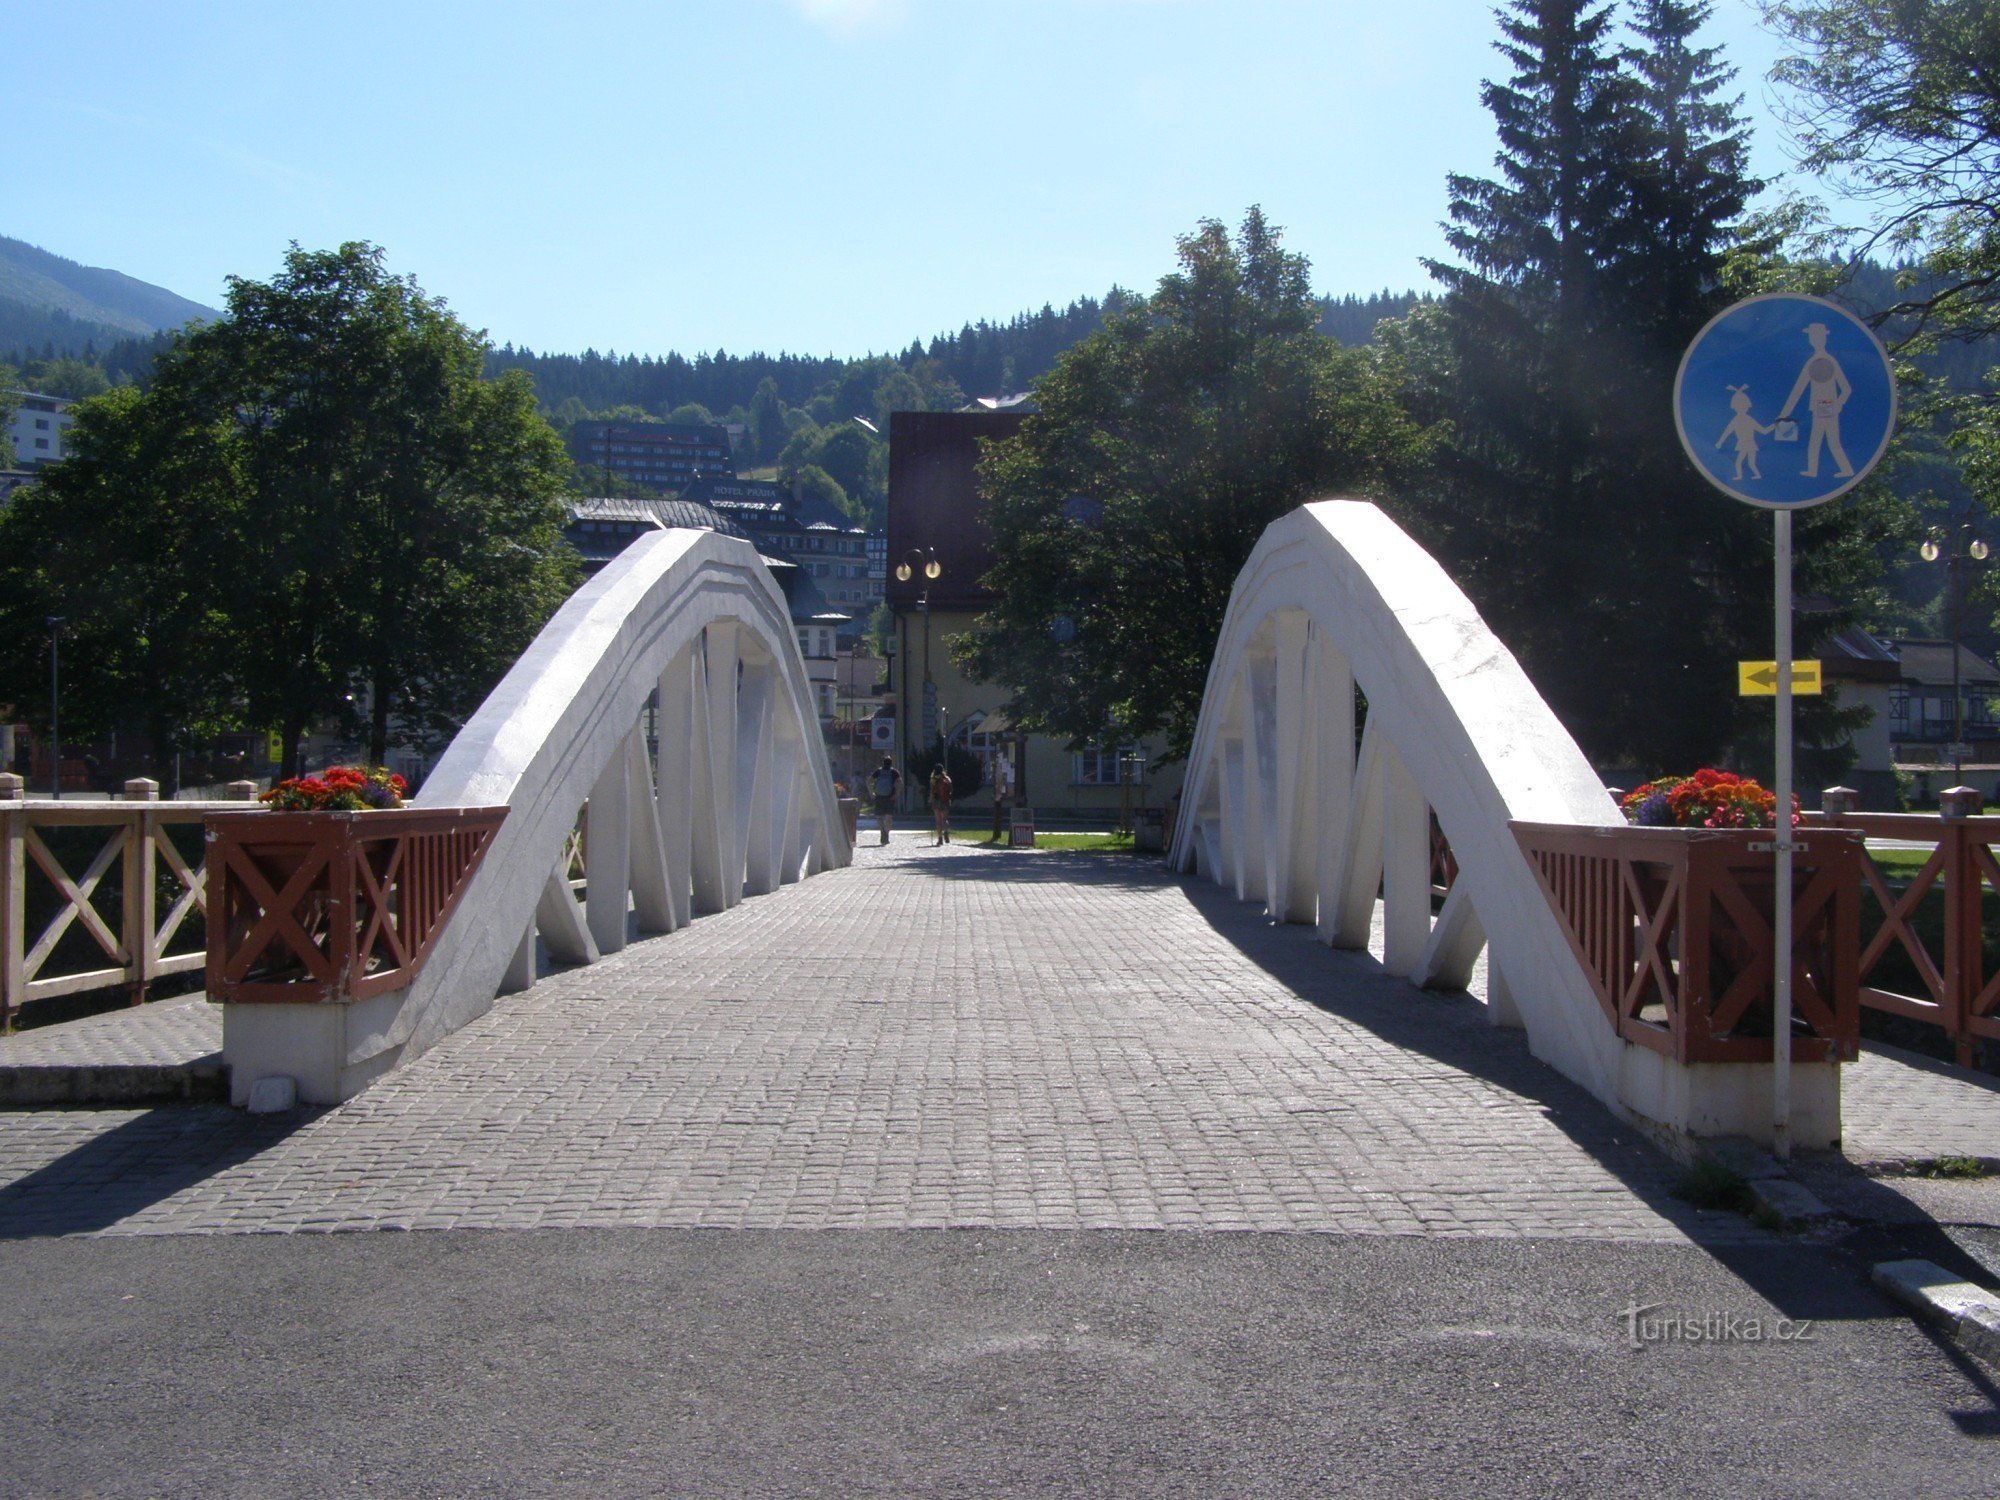 Špindlerův Mlýn - White Bridge